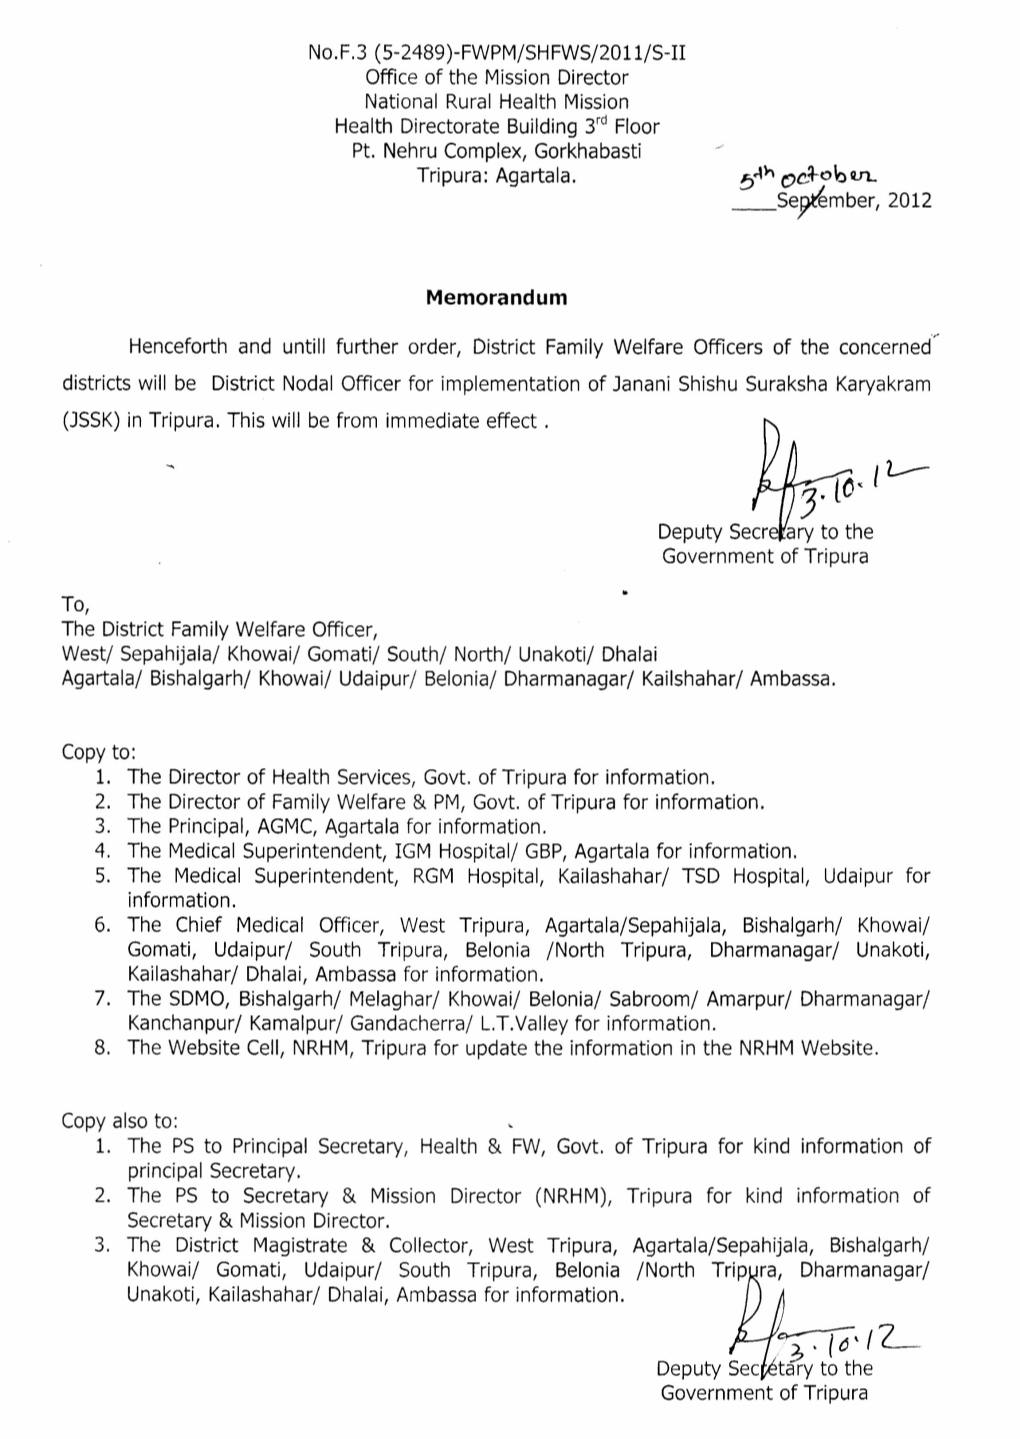 J" L Deputy Secr Ary to the Government of Tripura